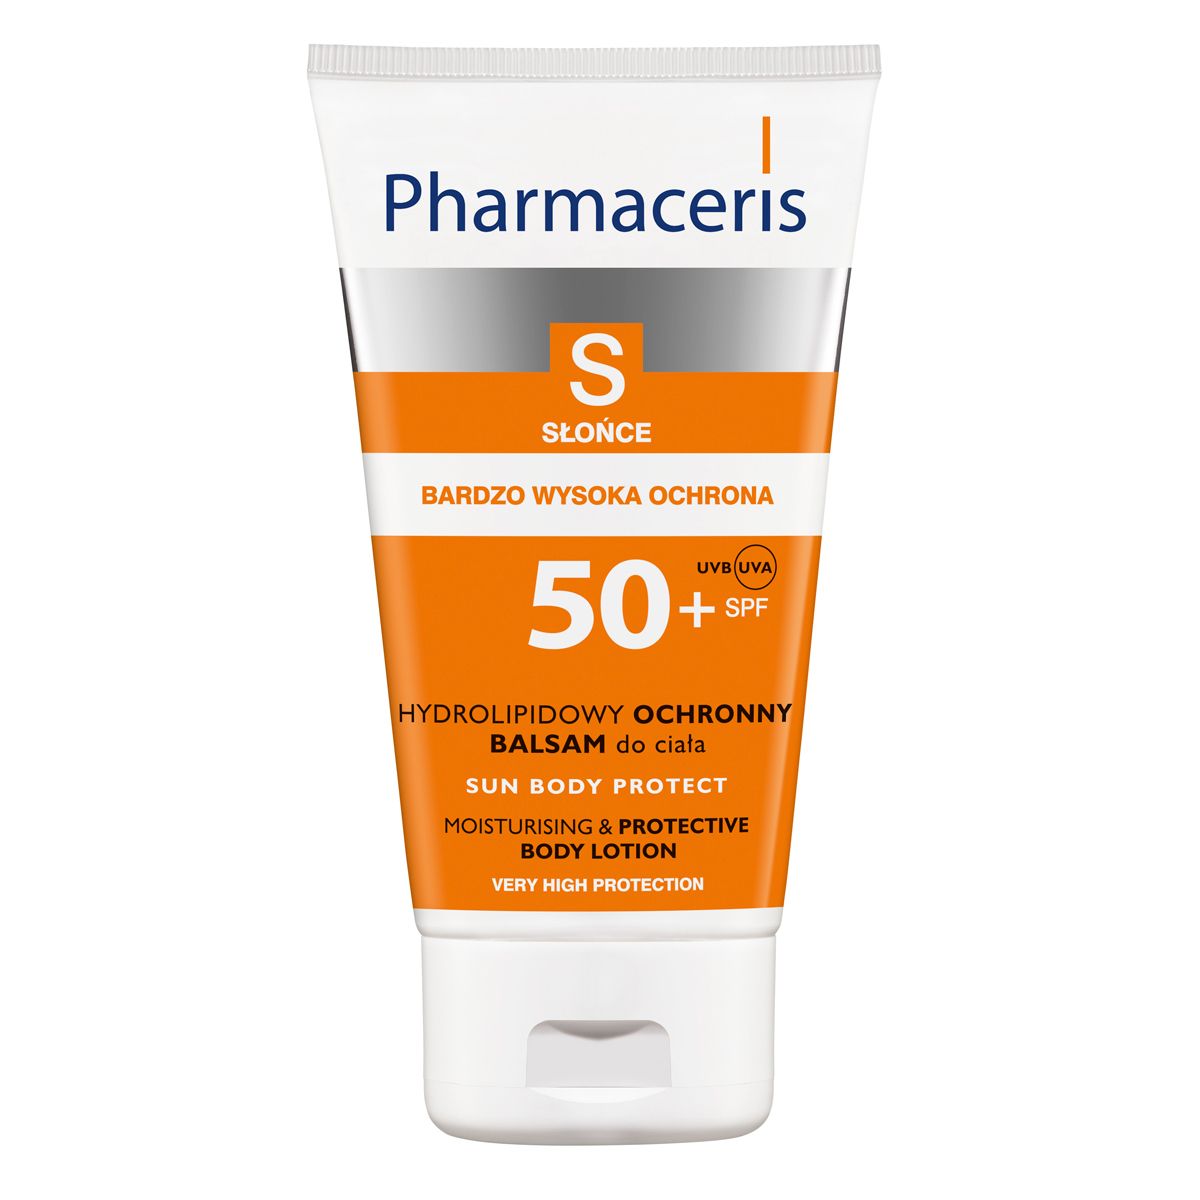 Pharmaceris S Sun Body Protect 50+ -150 ml |